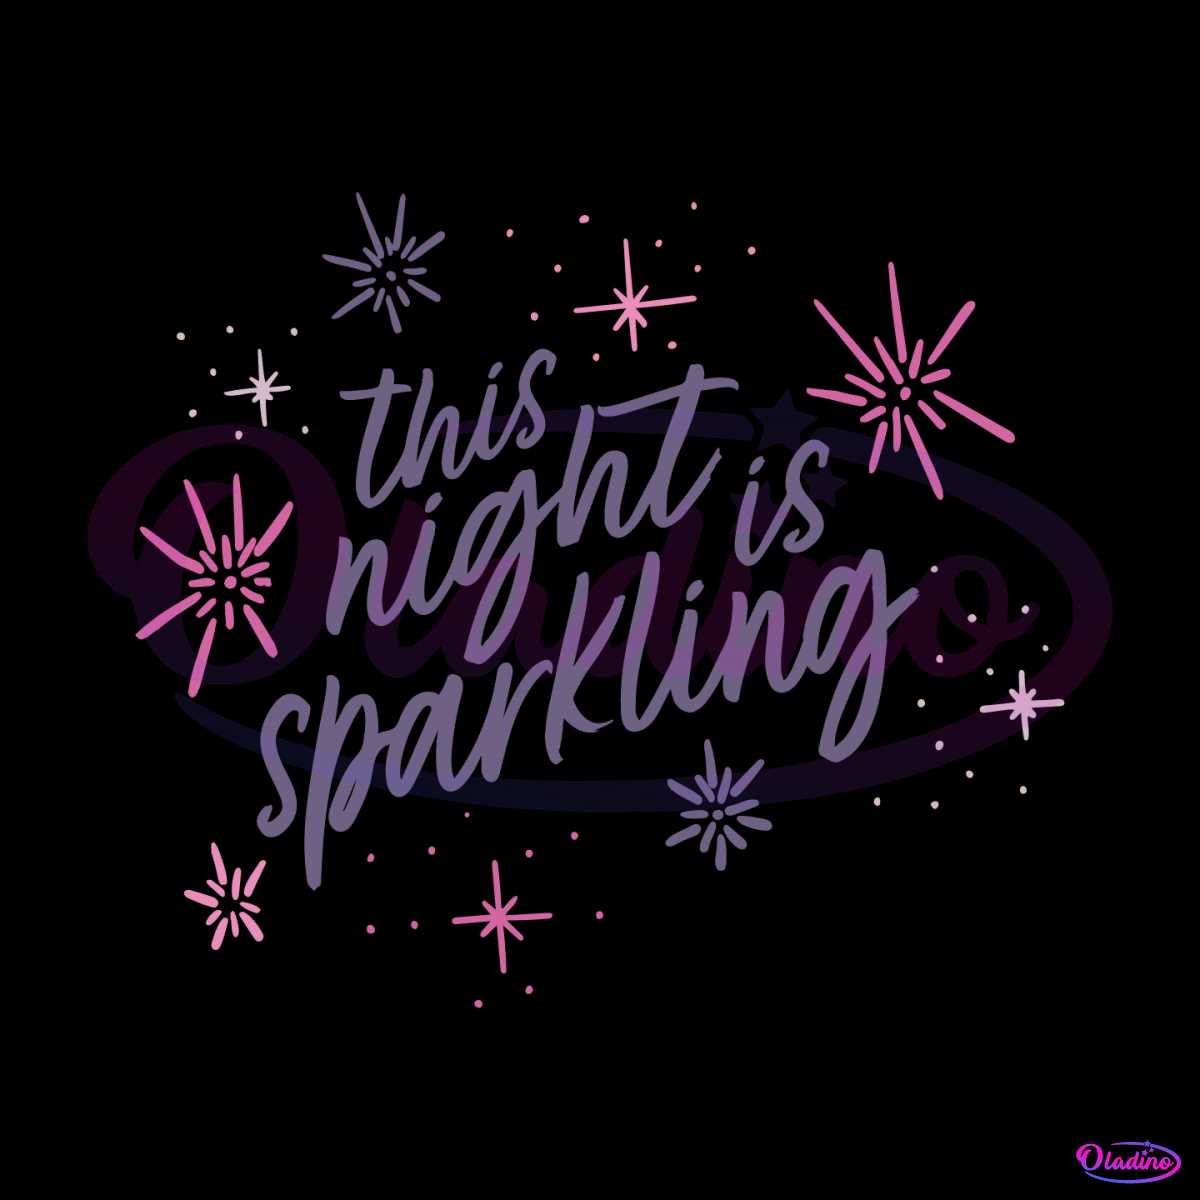 this-night-is-sparkling-svg-enchanted-lyrics-svg-cutting-file